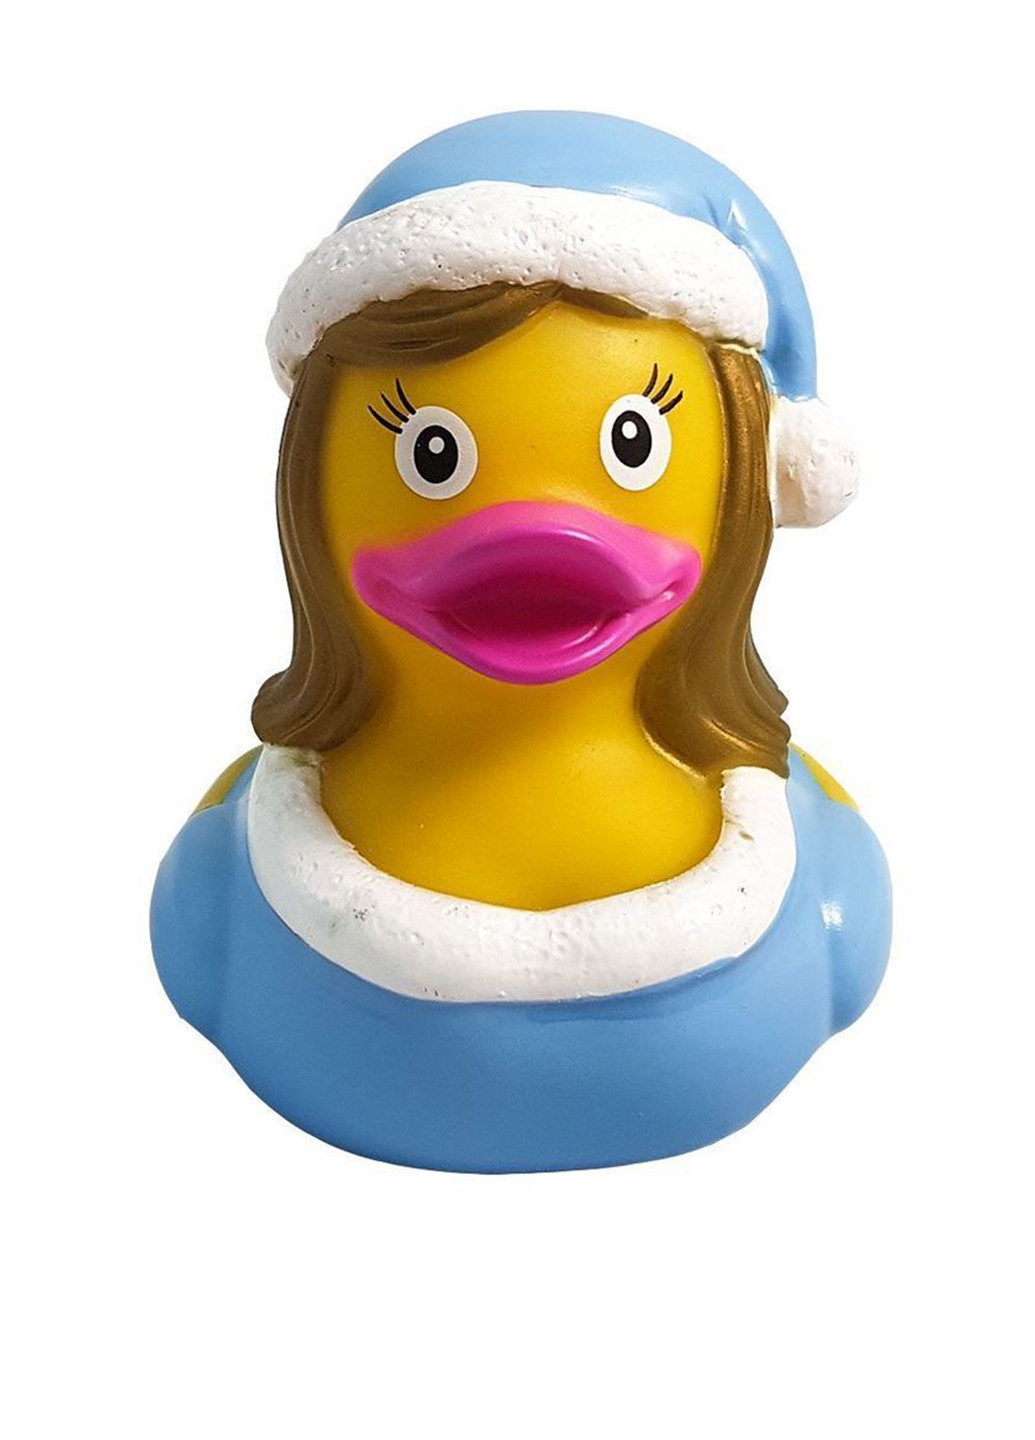 Игрушка для купания Утка Снегурочка, 8,5x8,5x7,5 см Funny Ducks (250618812)